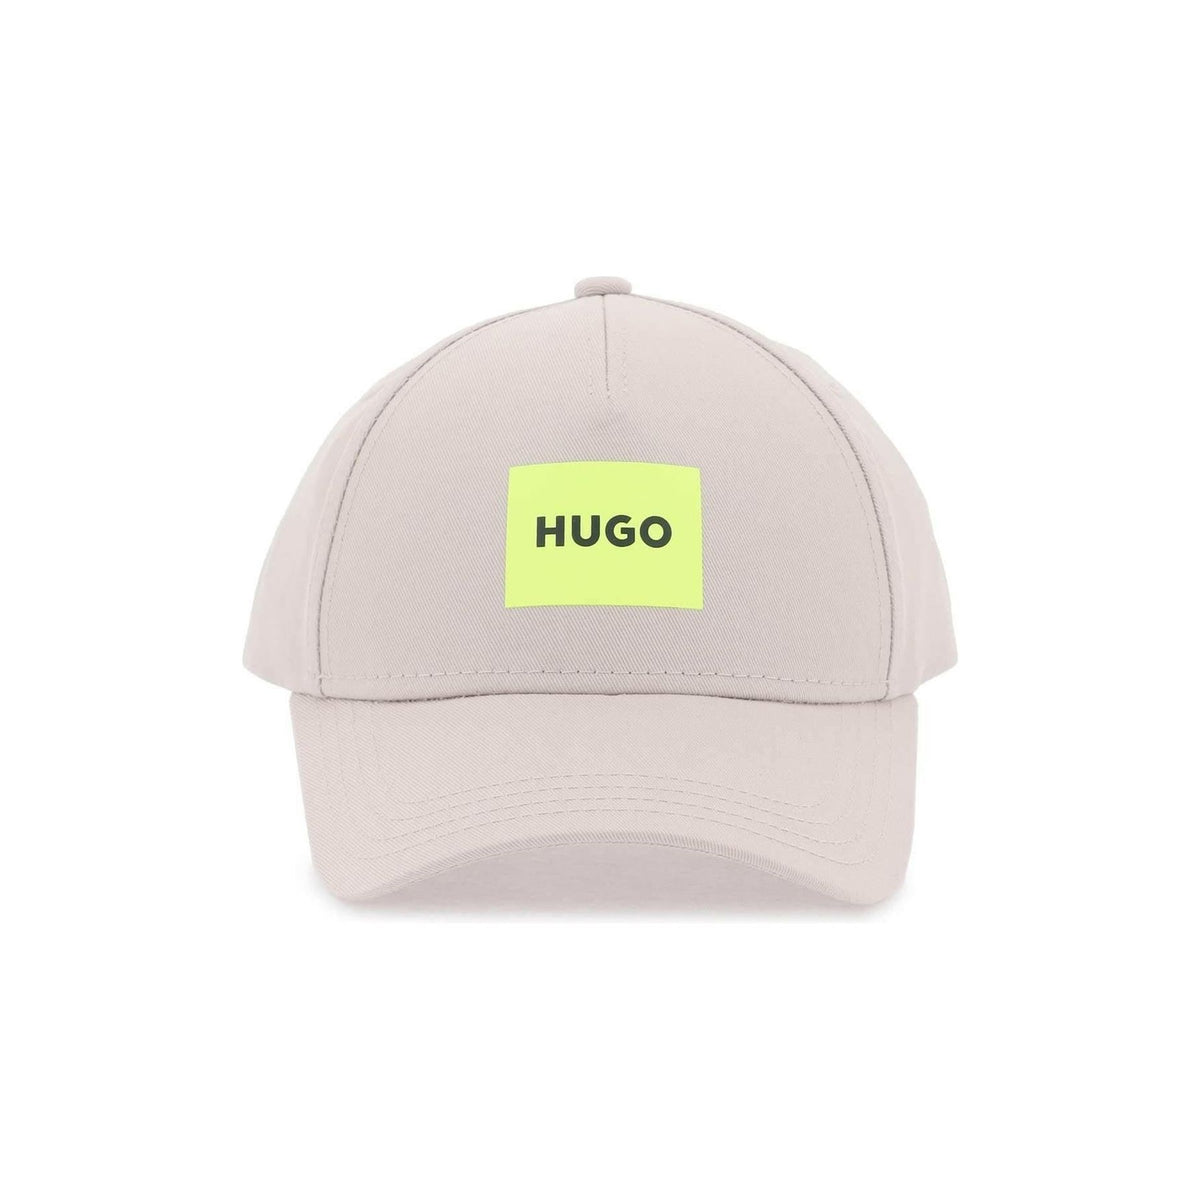 HUGO - Light Pastel Grey and Neon Logo Cotton Baseball Cap - JOHN JULIA